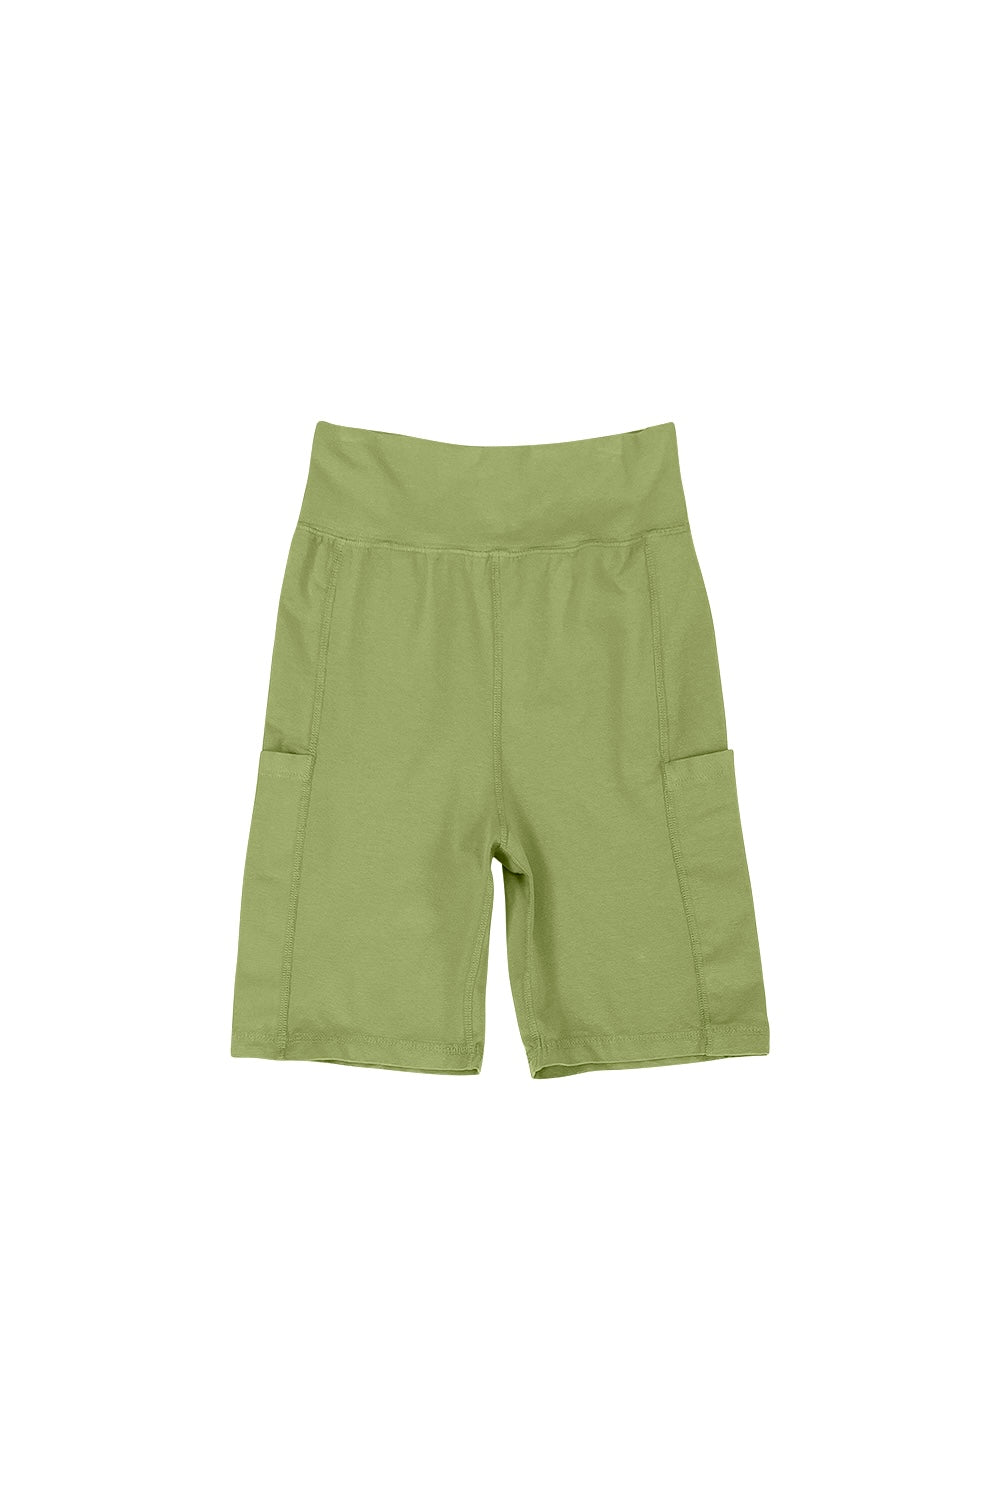 Bike Short with Pockets | Jungmaven Hemp Clothing & Accessories / Color: Dark Matcha